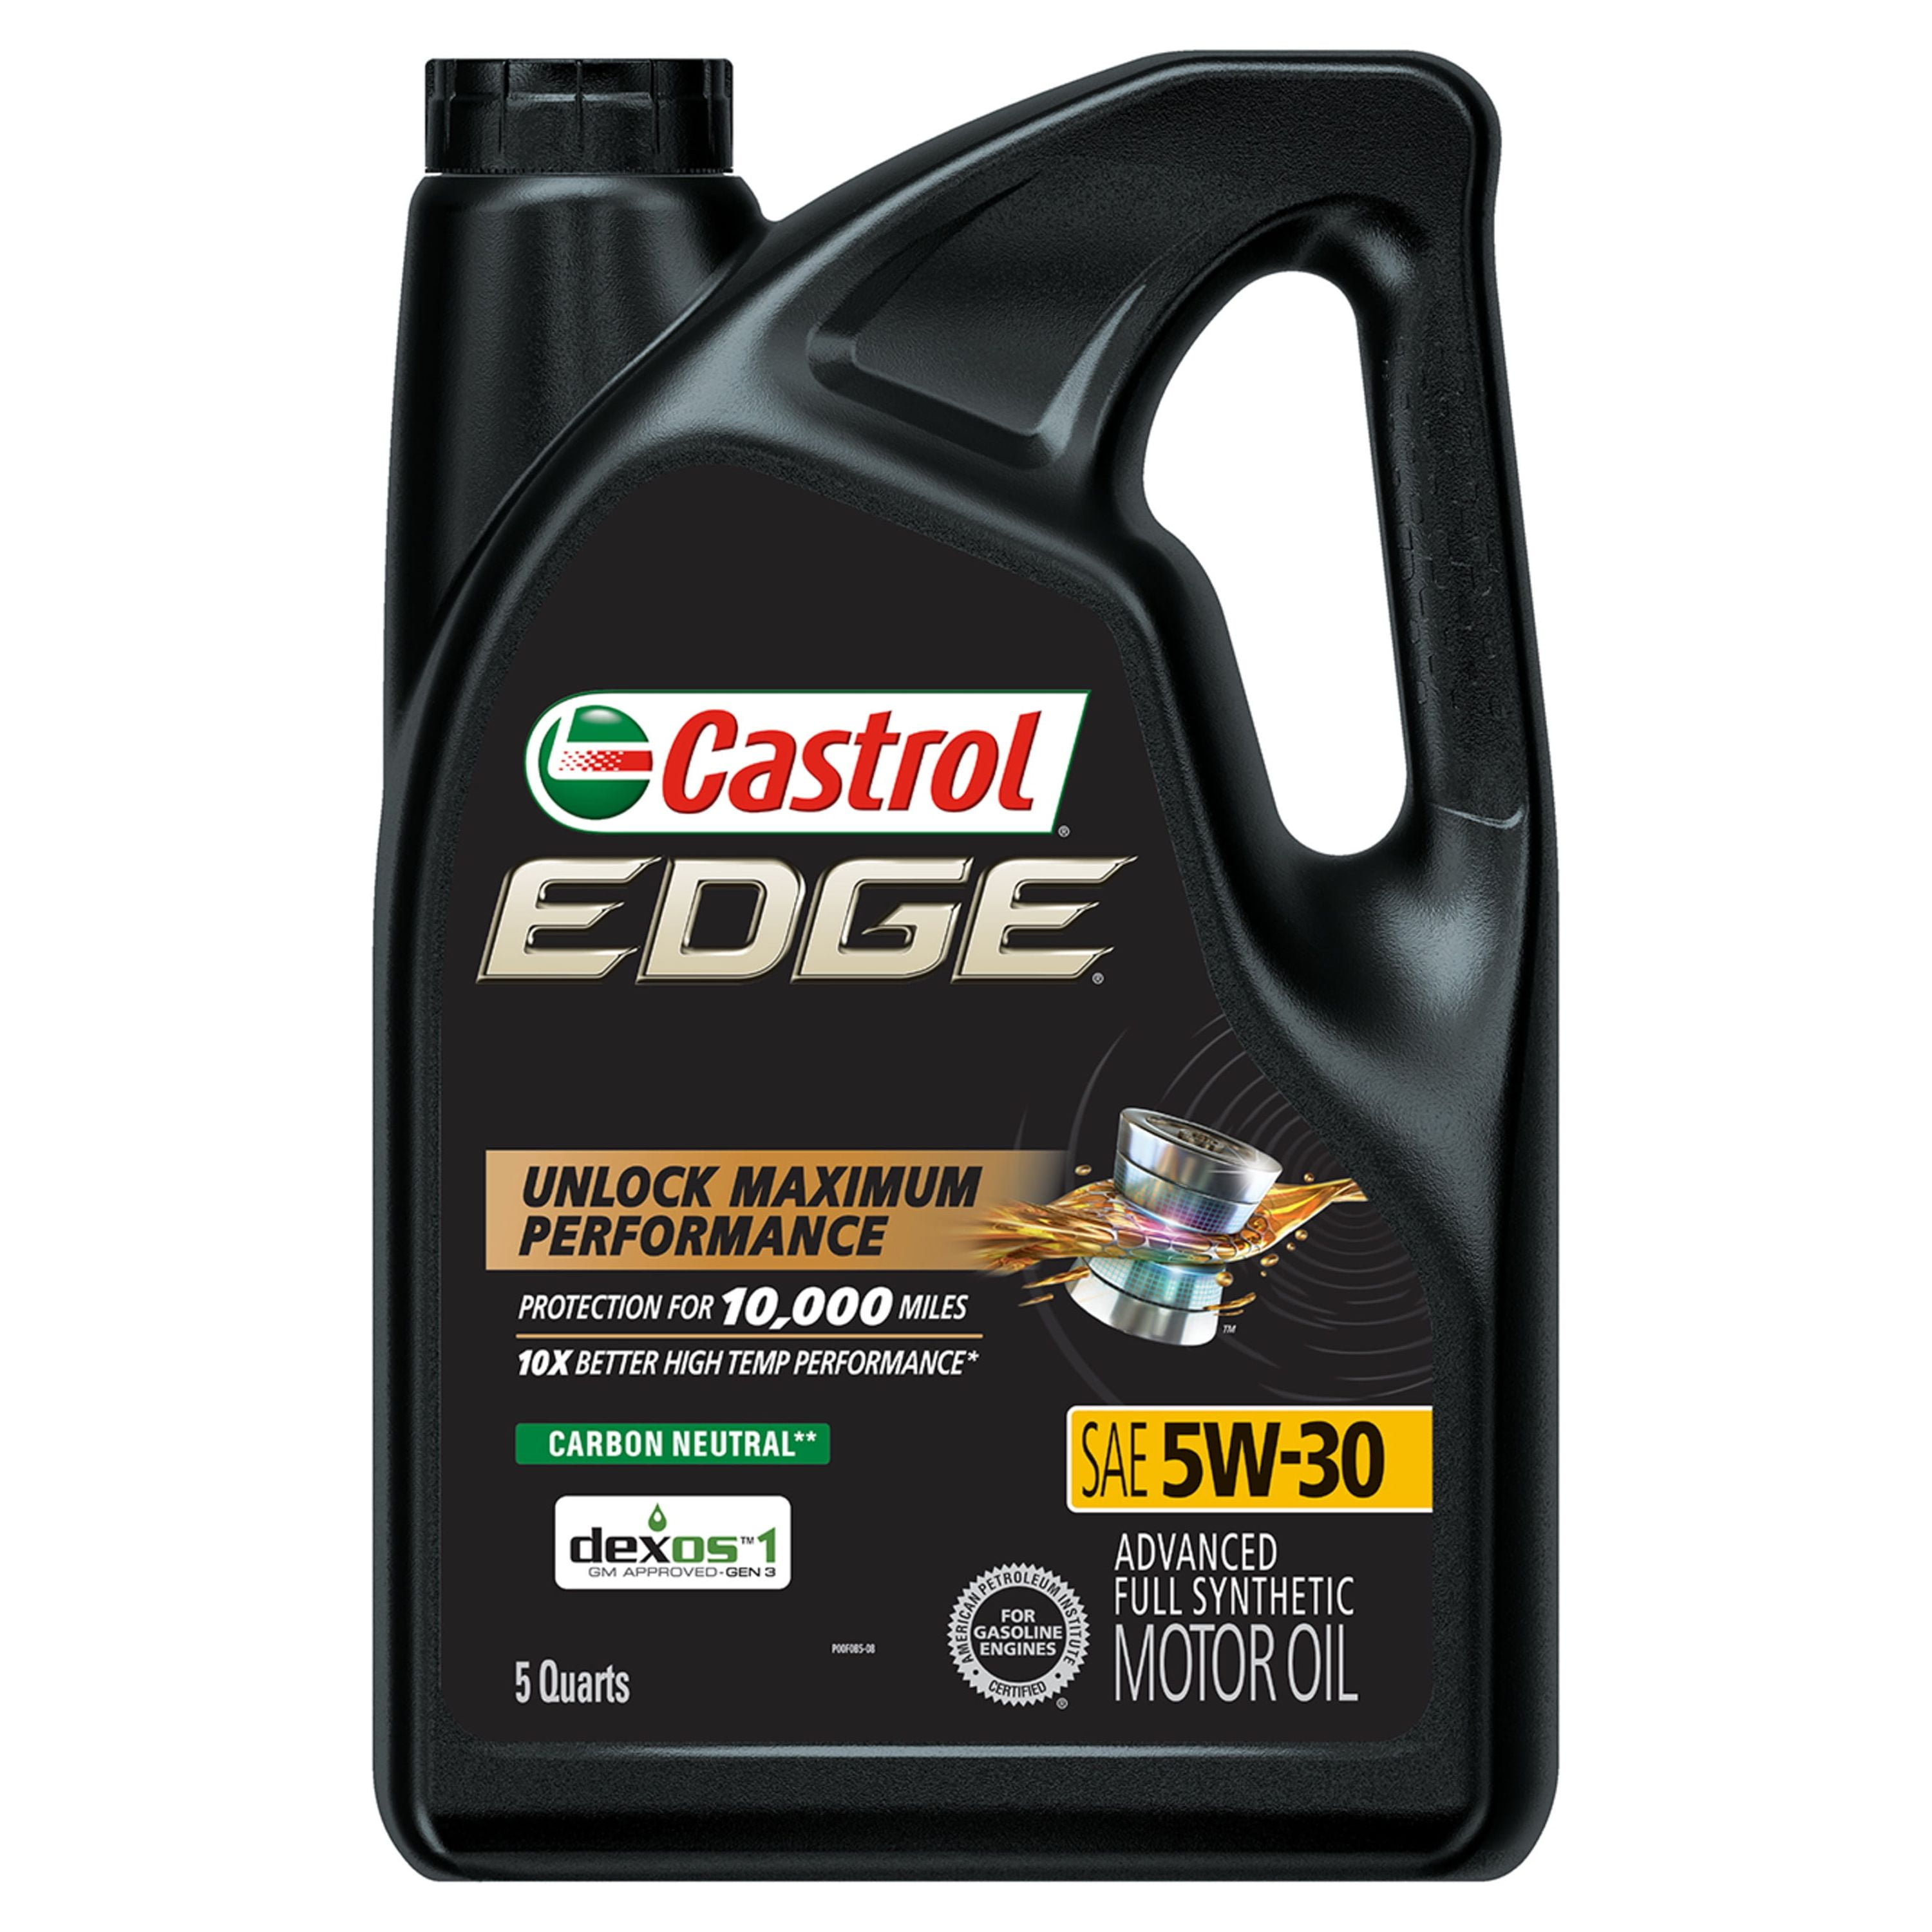 Castrol EDGE 5W-30 Advanced Full Synthetic Motor Oil, 5 Quarts 